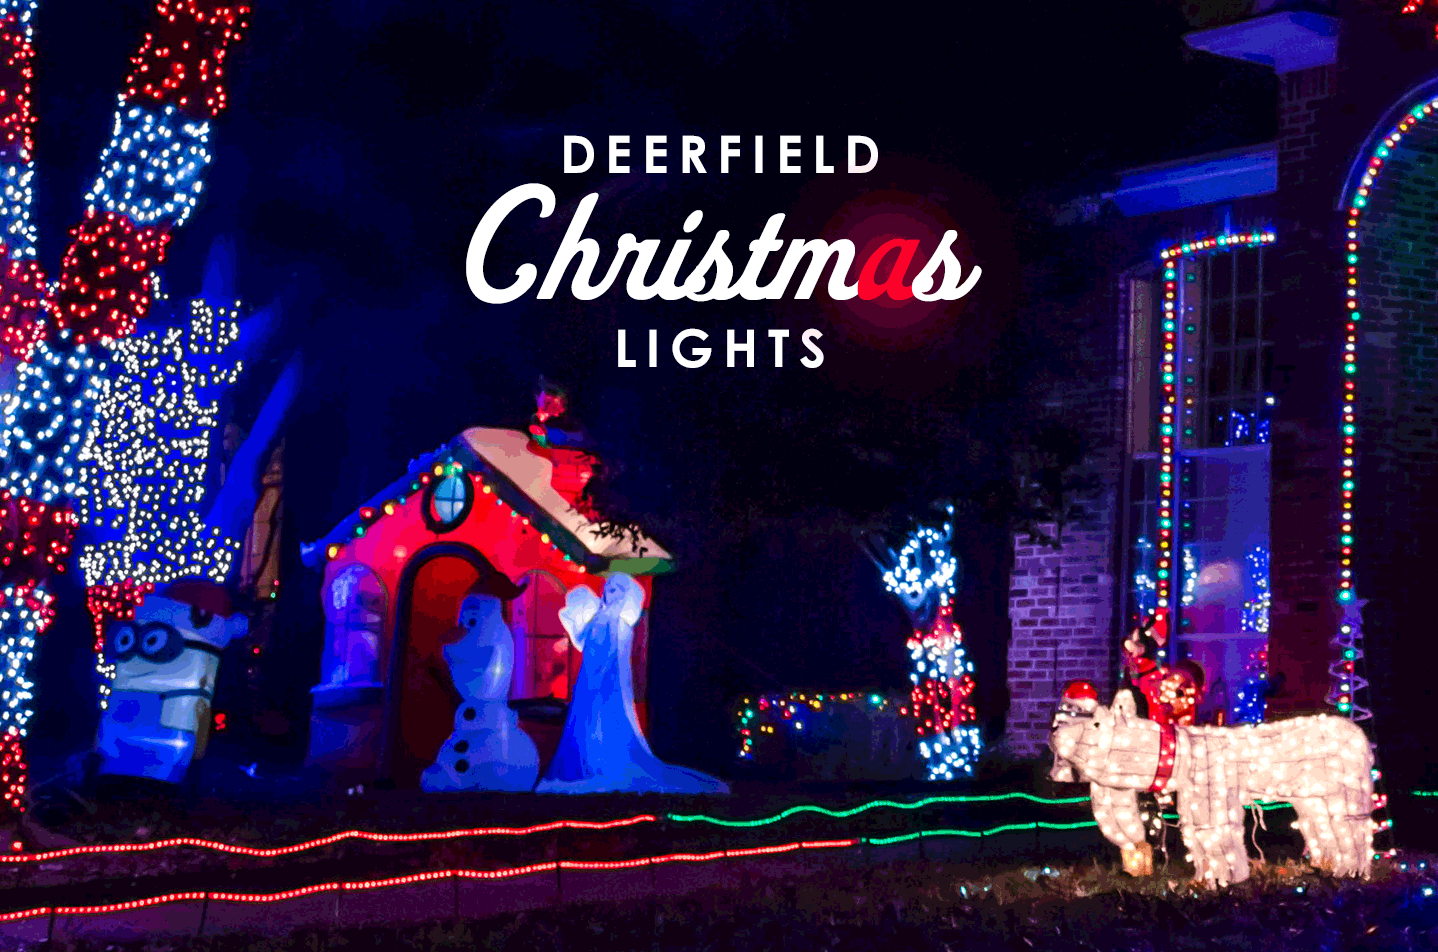 Deerfield Christmas Lights 2016